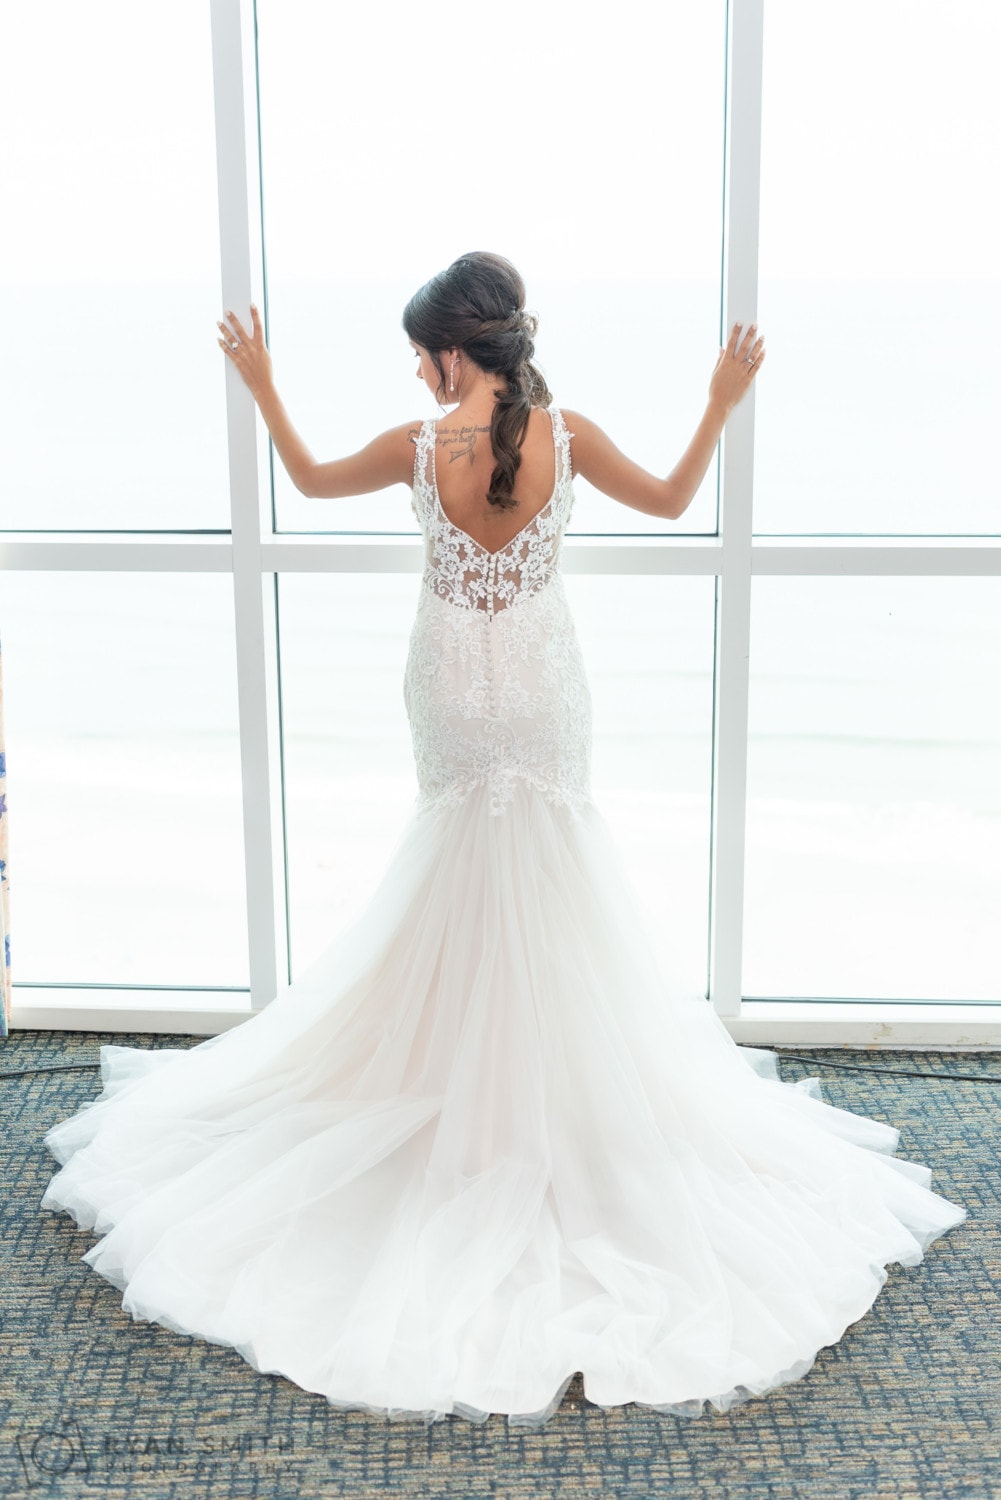 Bride looking out of the window - Avista Resort - North Myrtle Beach